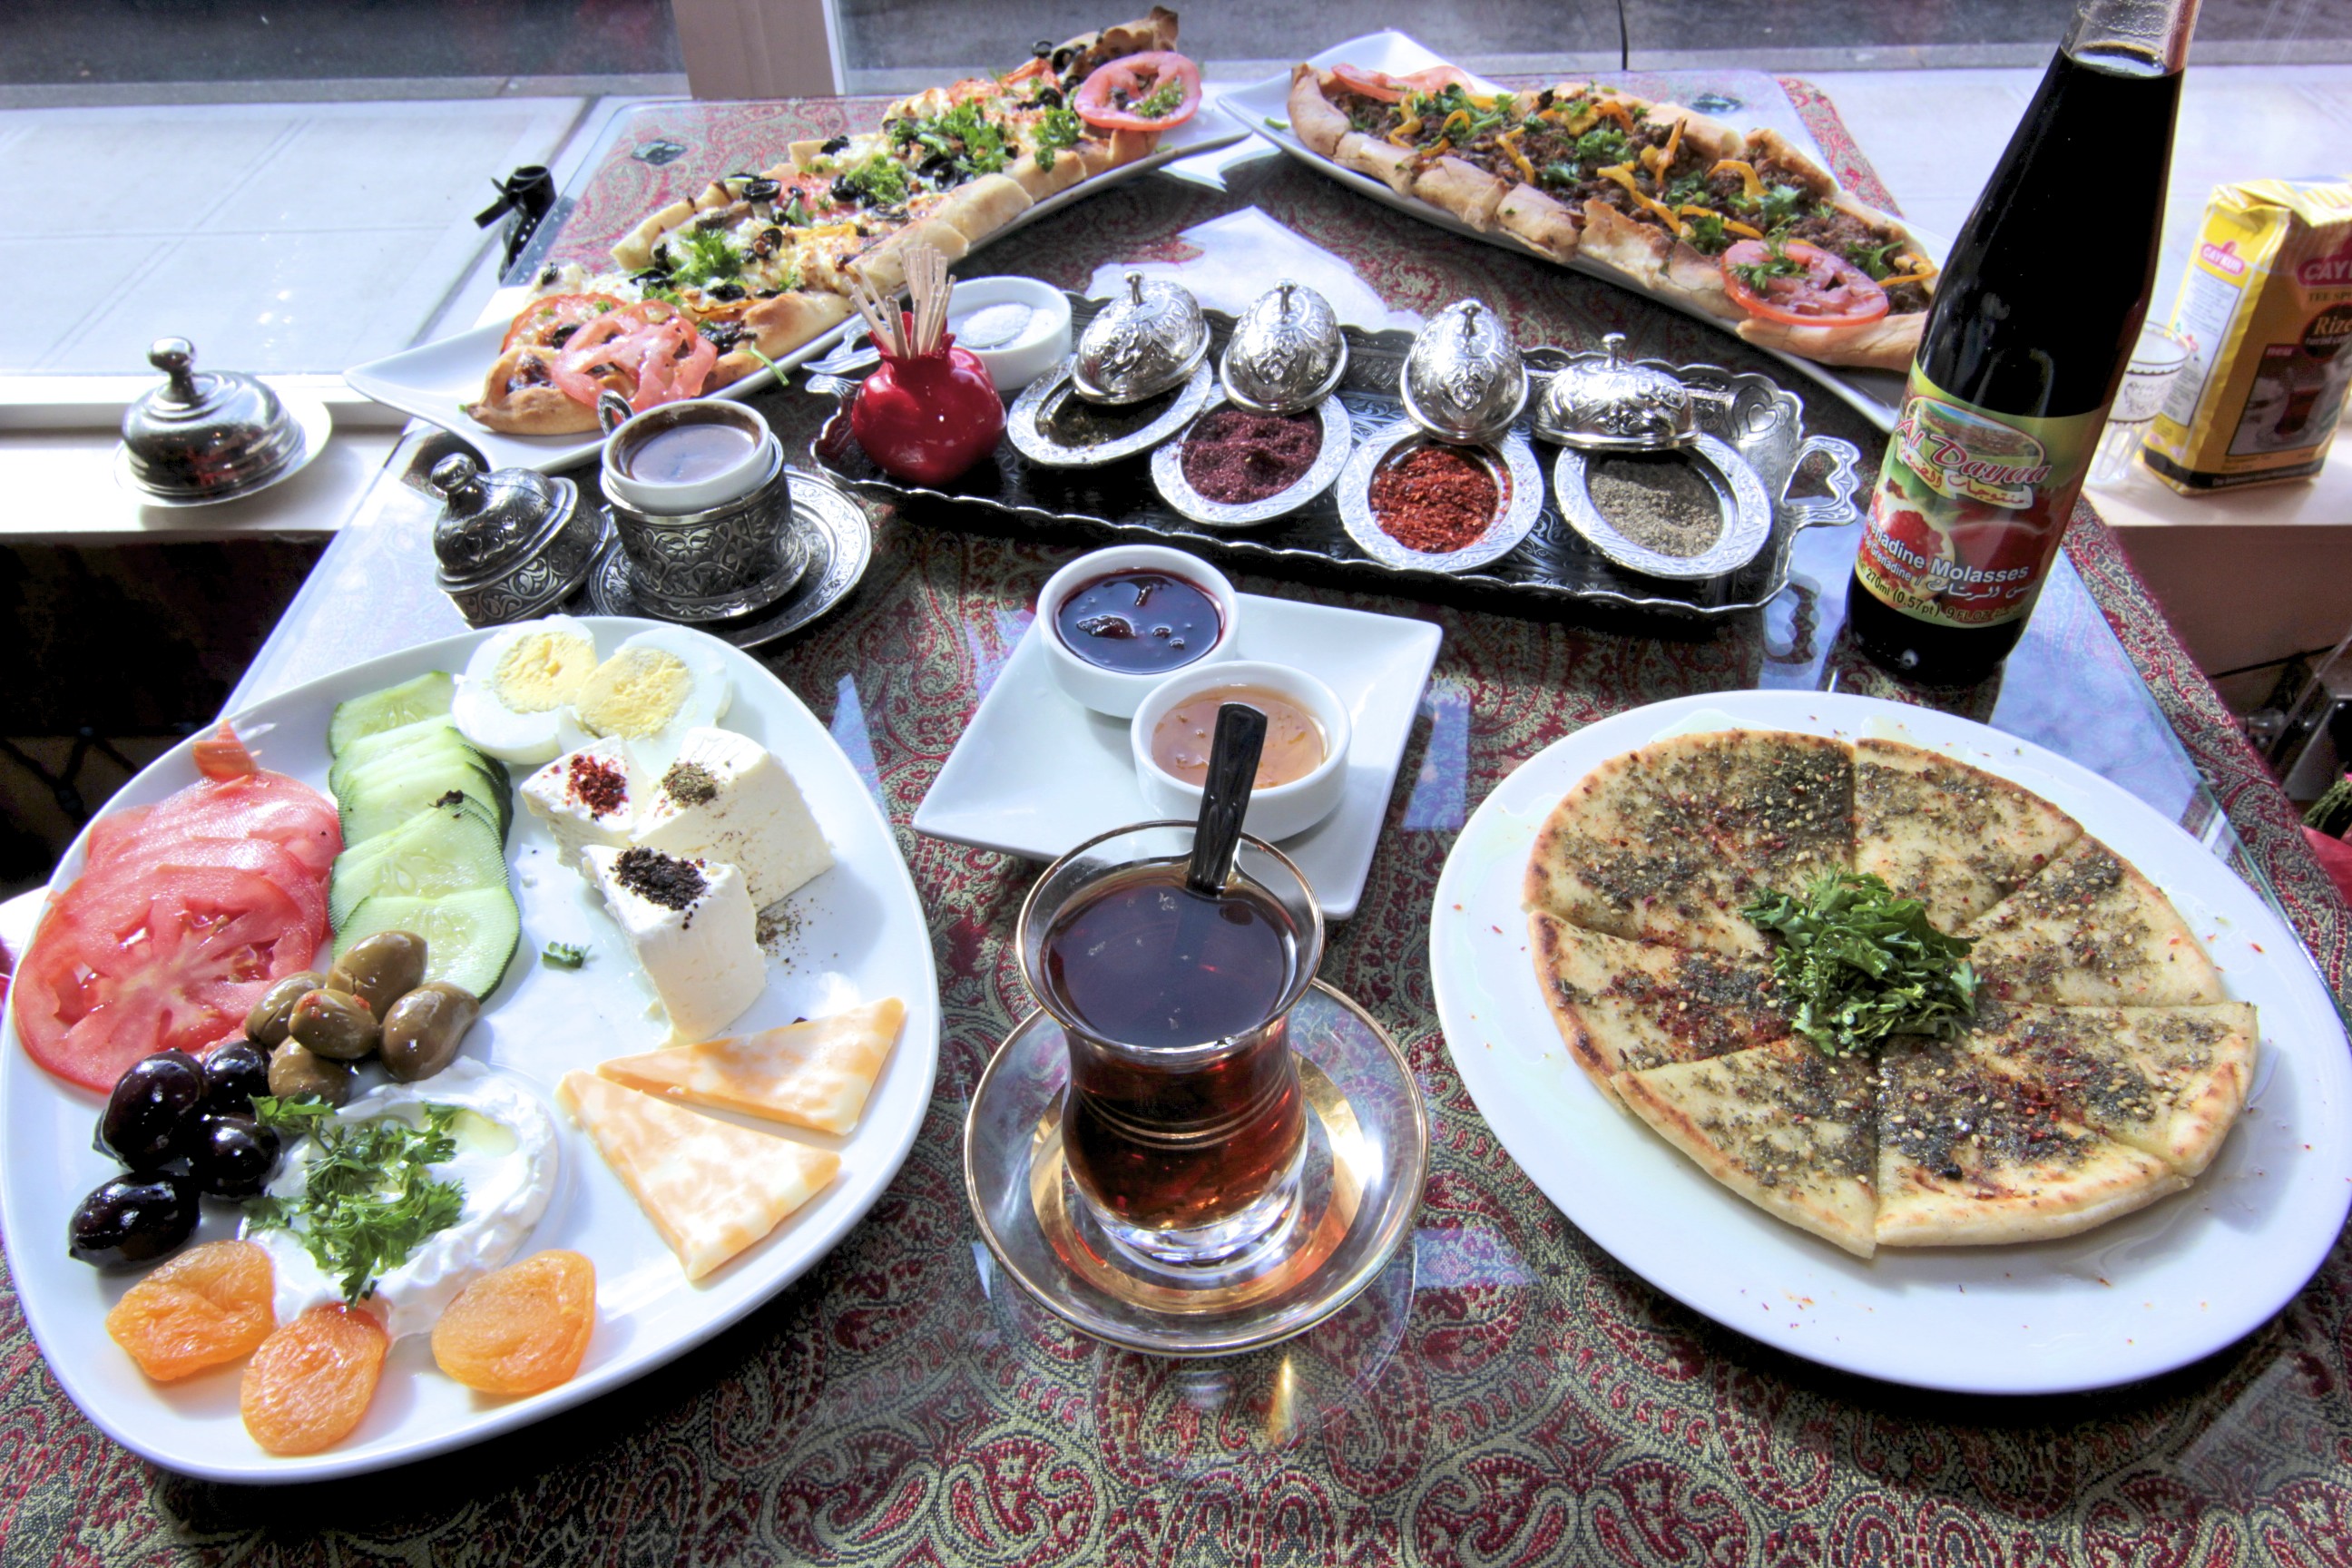 Left: A Turkish breakfast platter at Cafe Turko. Right: Sureyya Gokeri, Cafe Turko’s chef, poses with a Turkish dish.